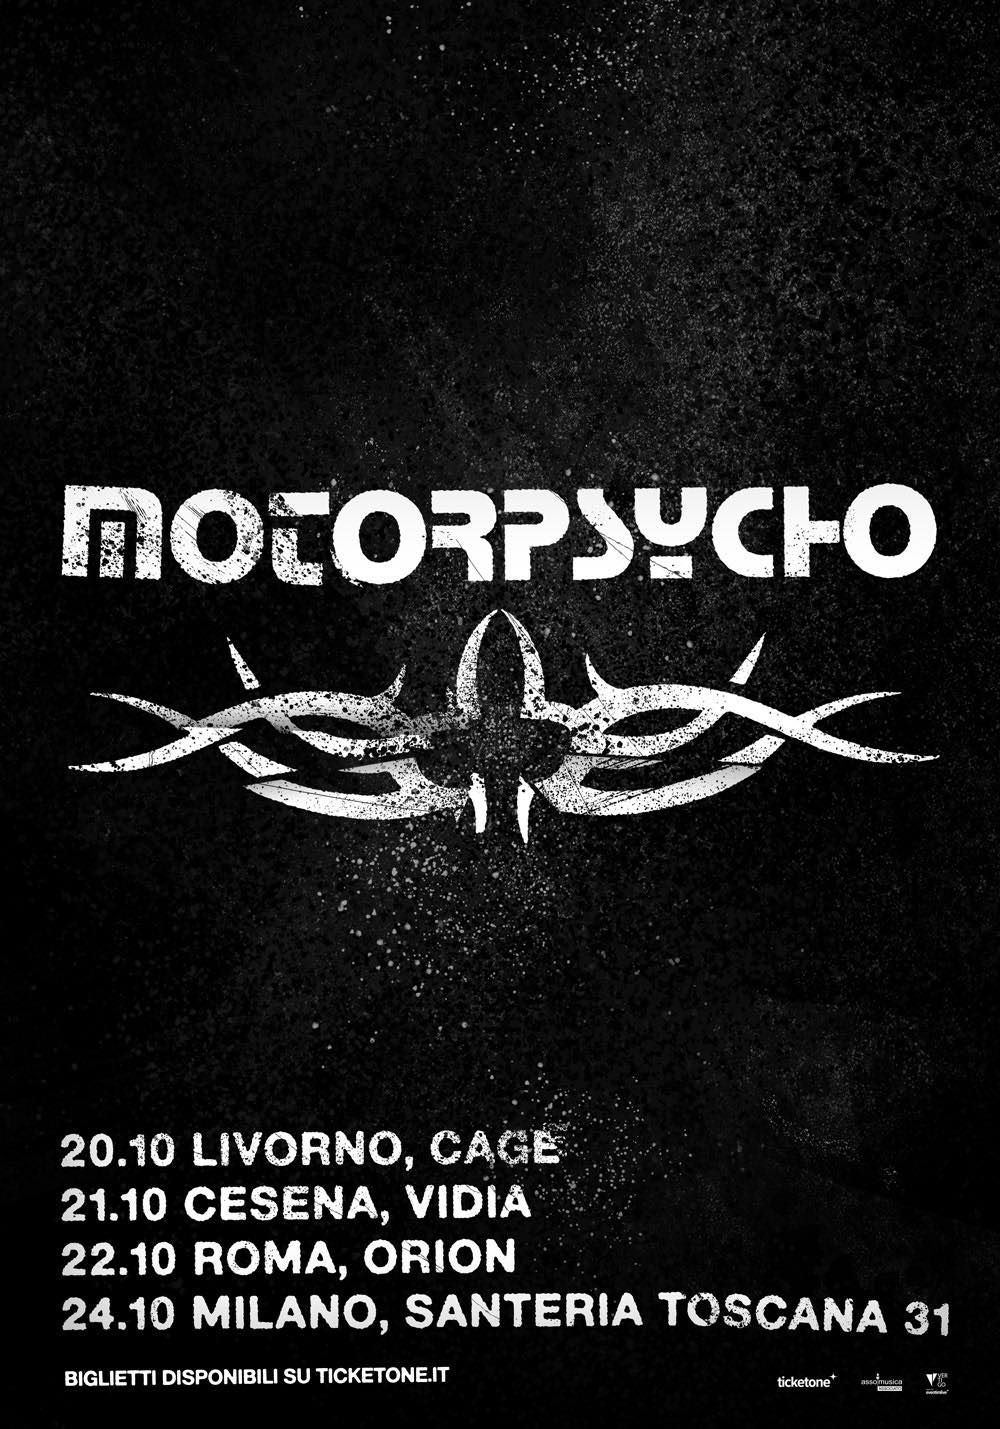 motorpsycho tour dates